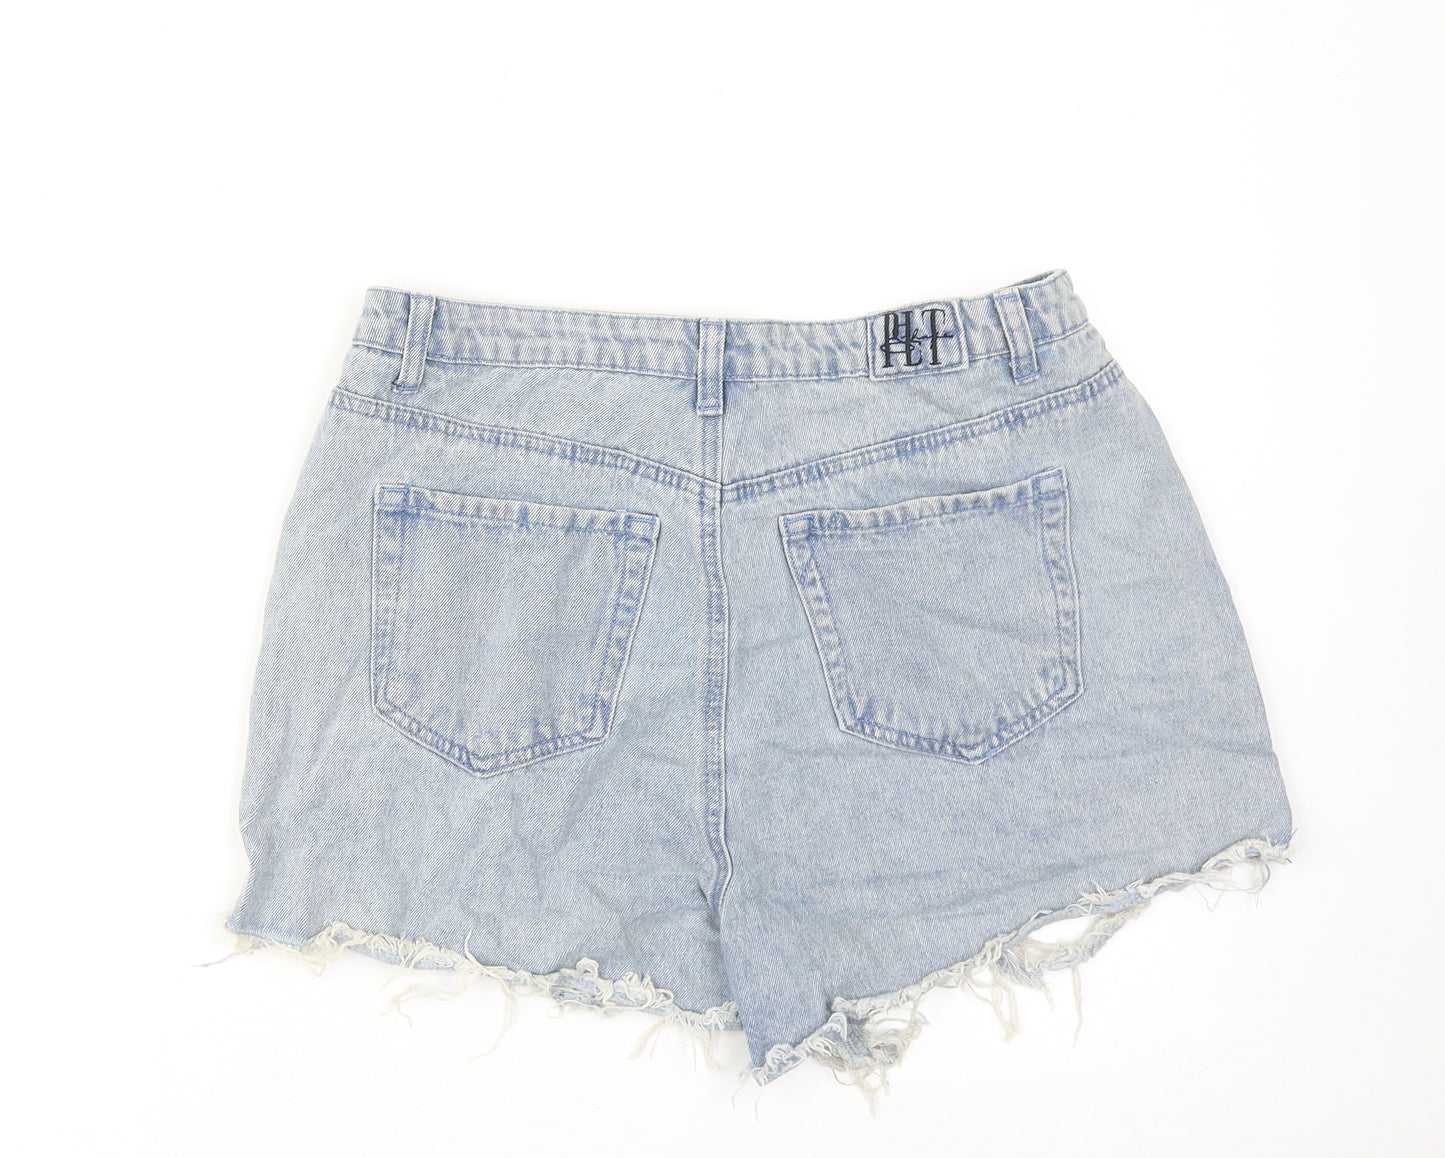 PRETTYLITTLETHING Womens Blue Cotton Cut-Off Shorts Size 12 Regular Zip